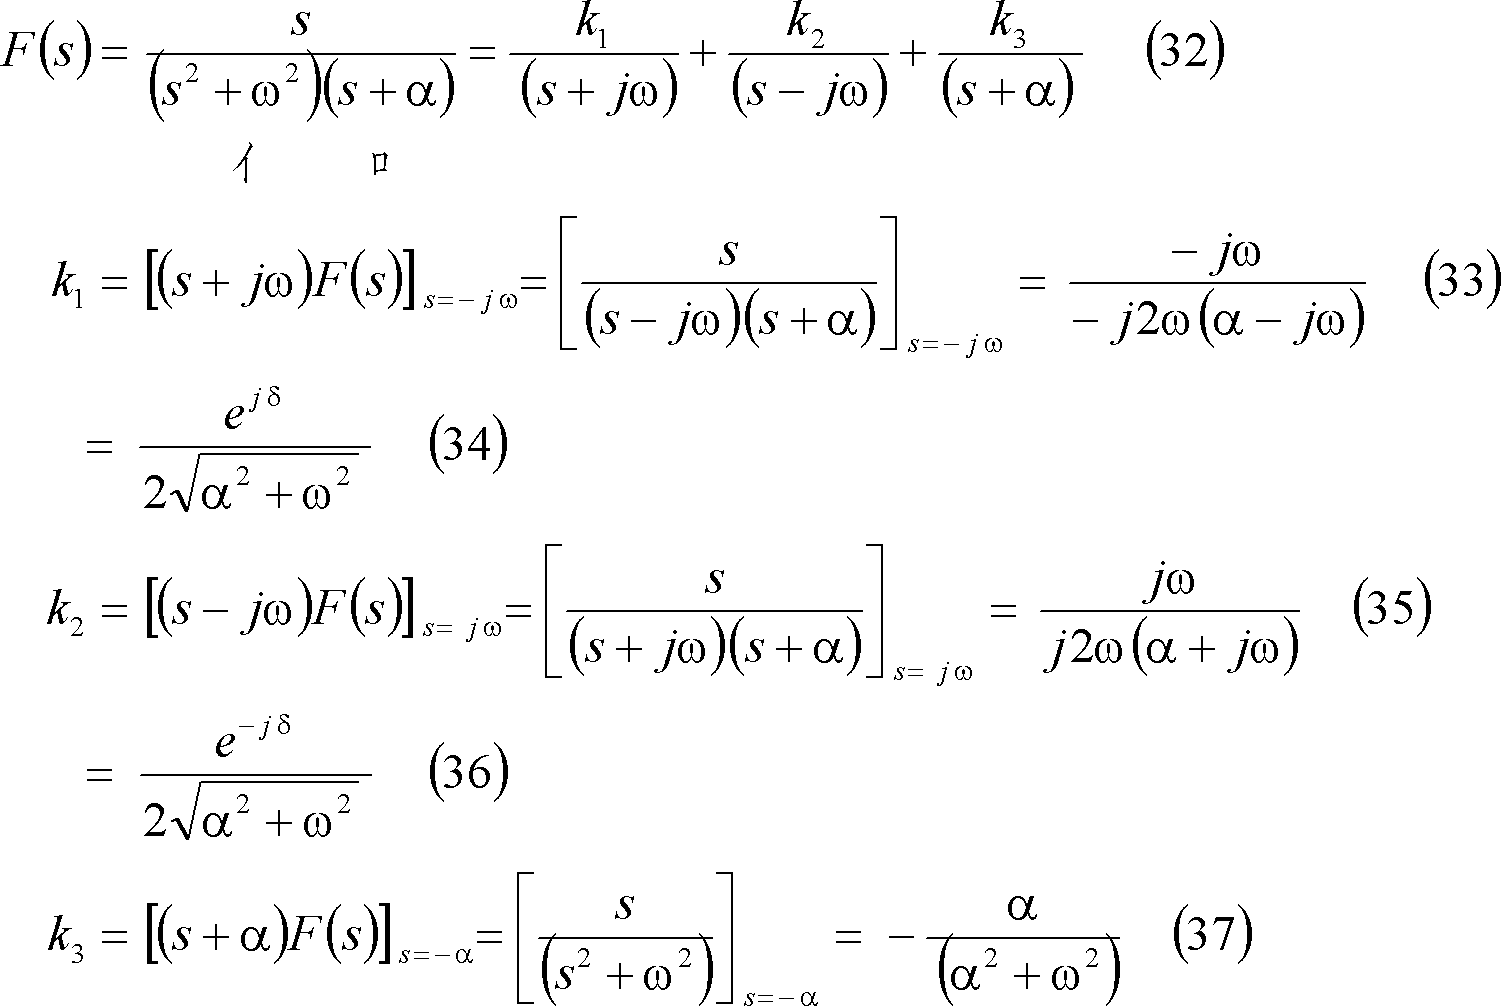 formula015